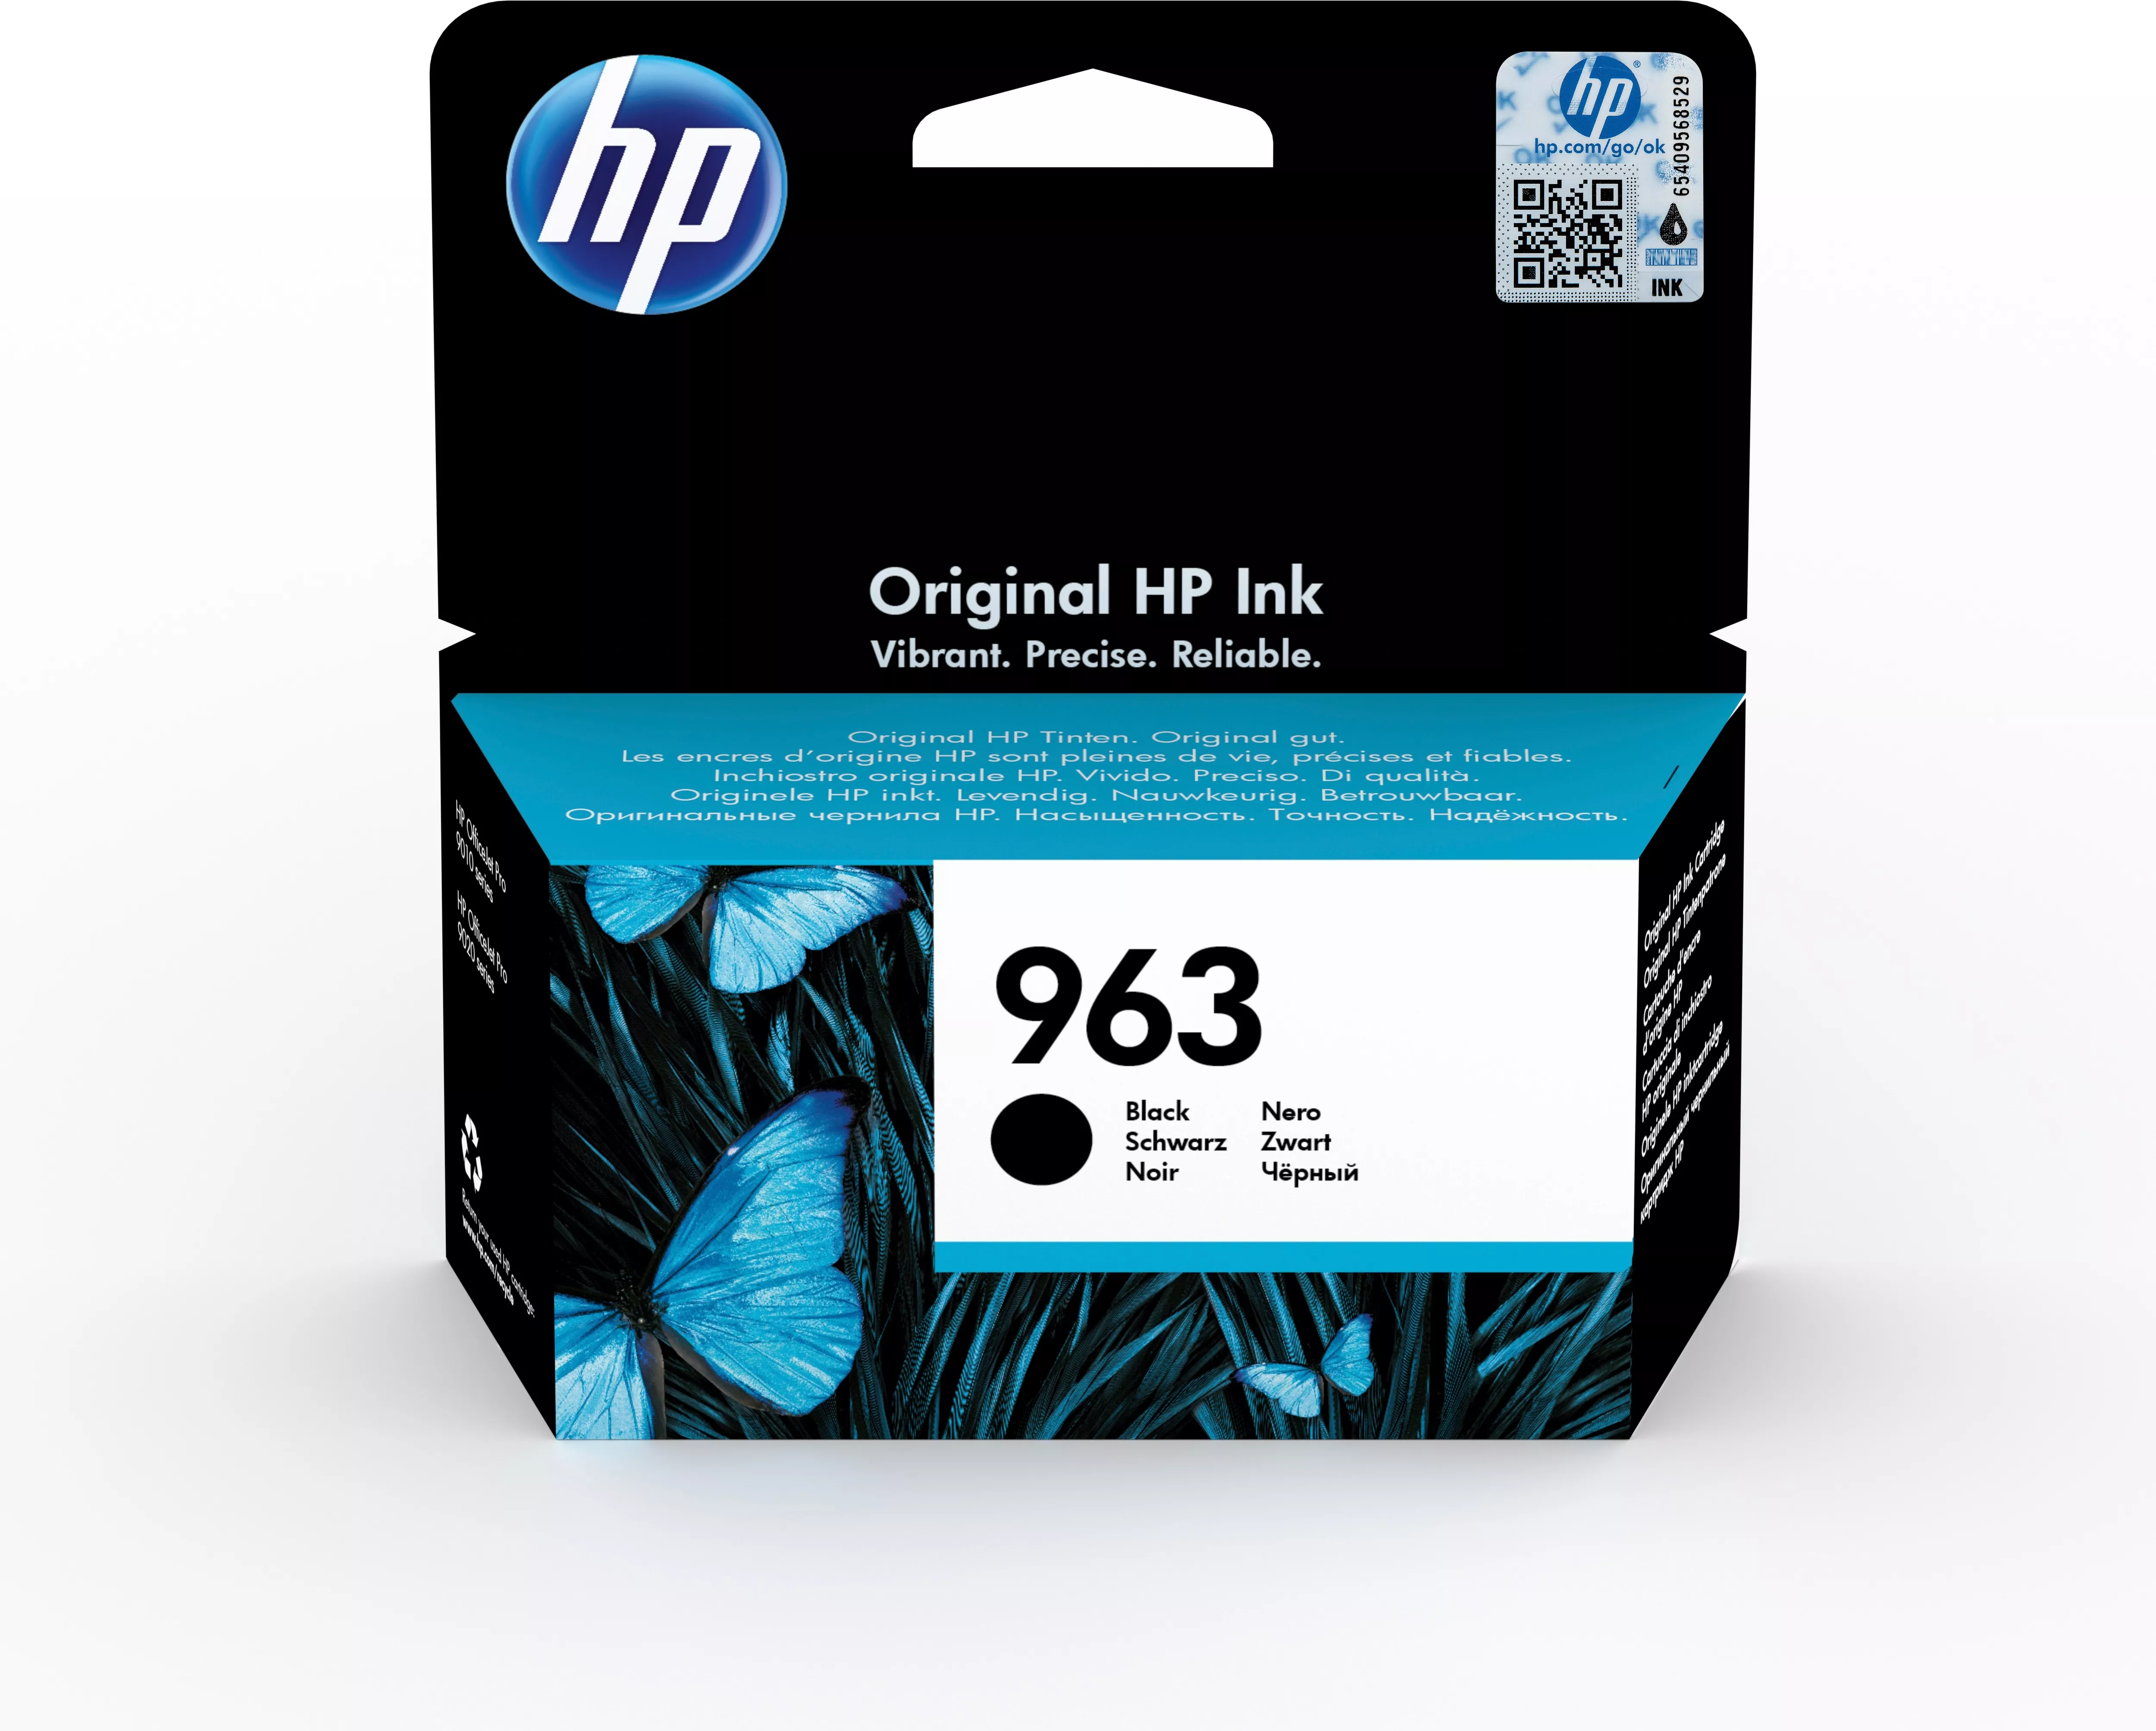 Achat HP 963 Black Original Ink Cartridge au meilleur prix